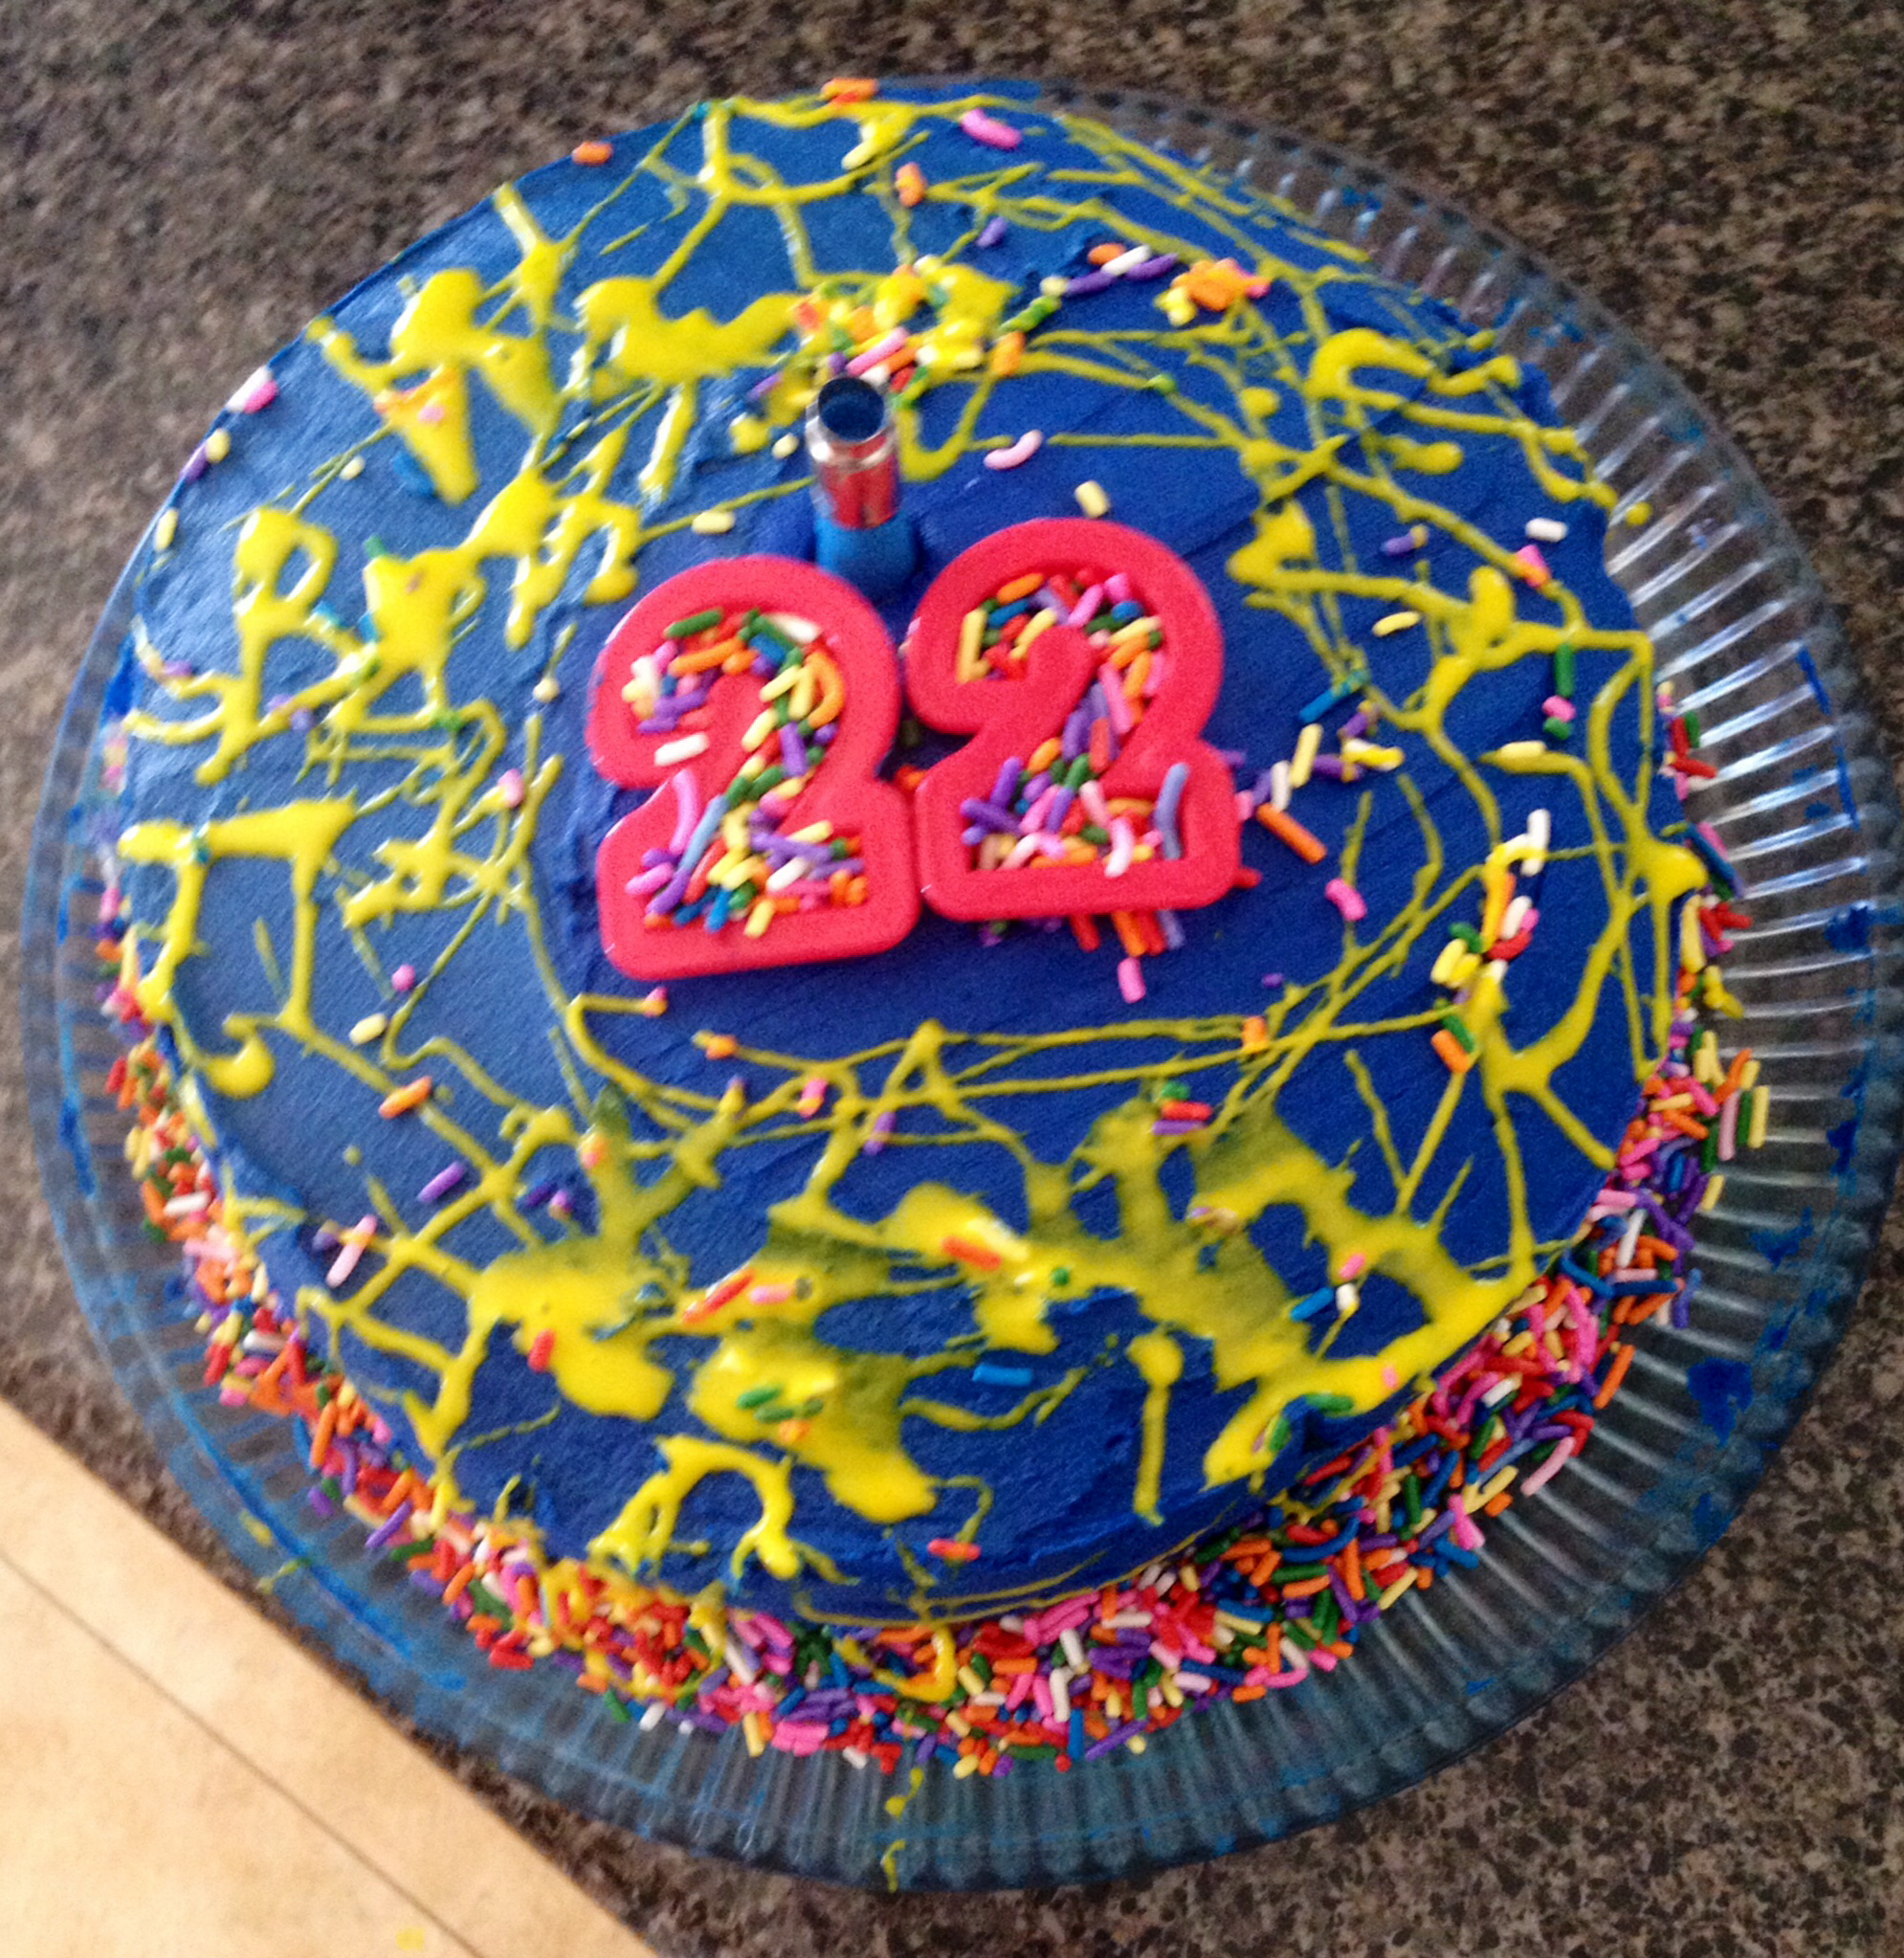 22 Year Old Birthday Cake